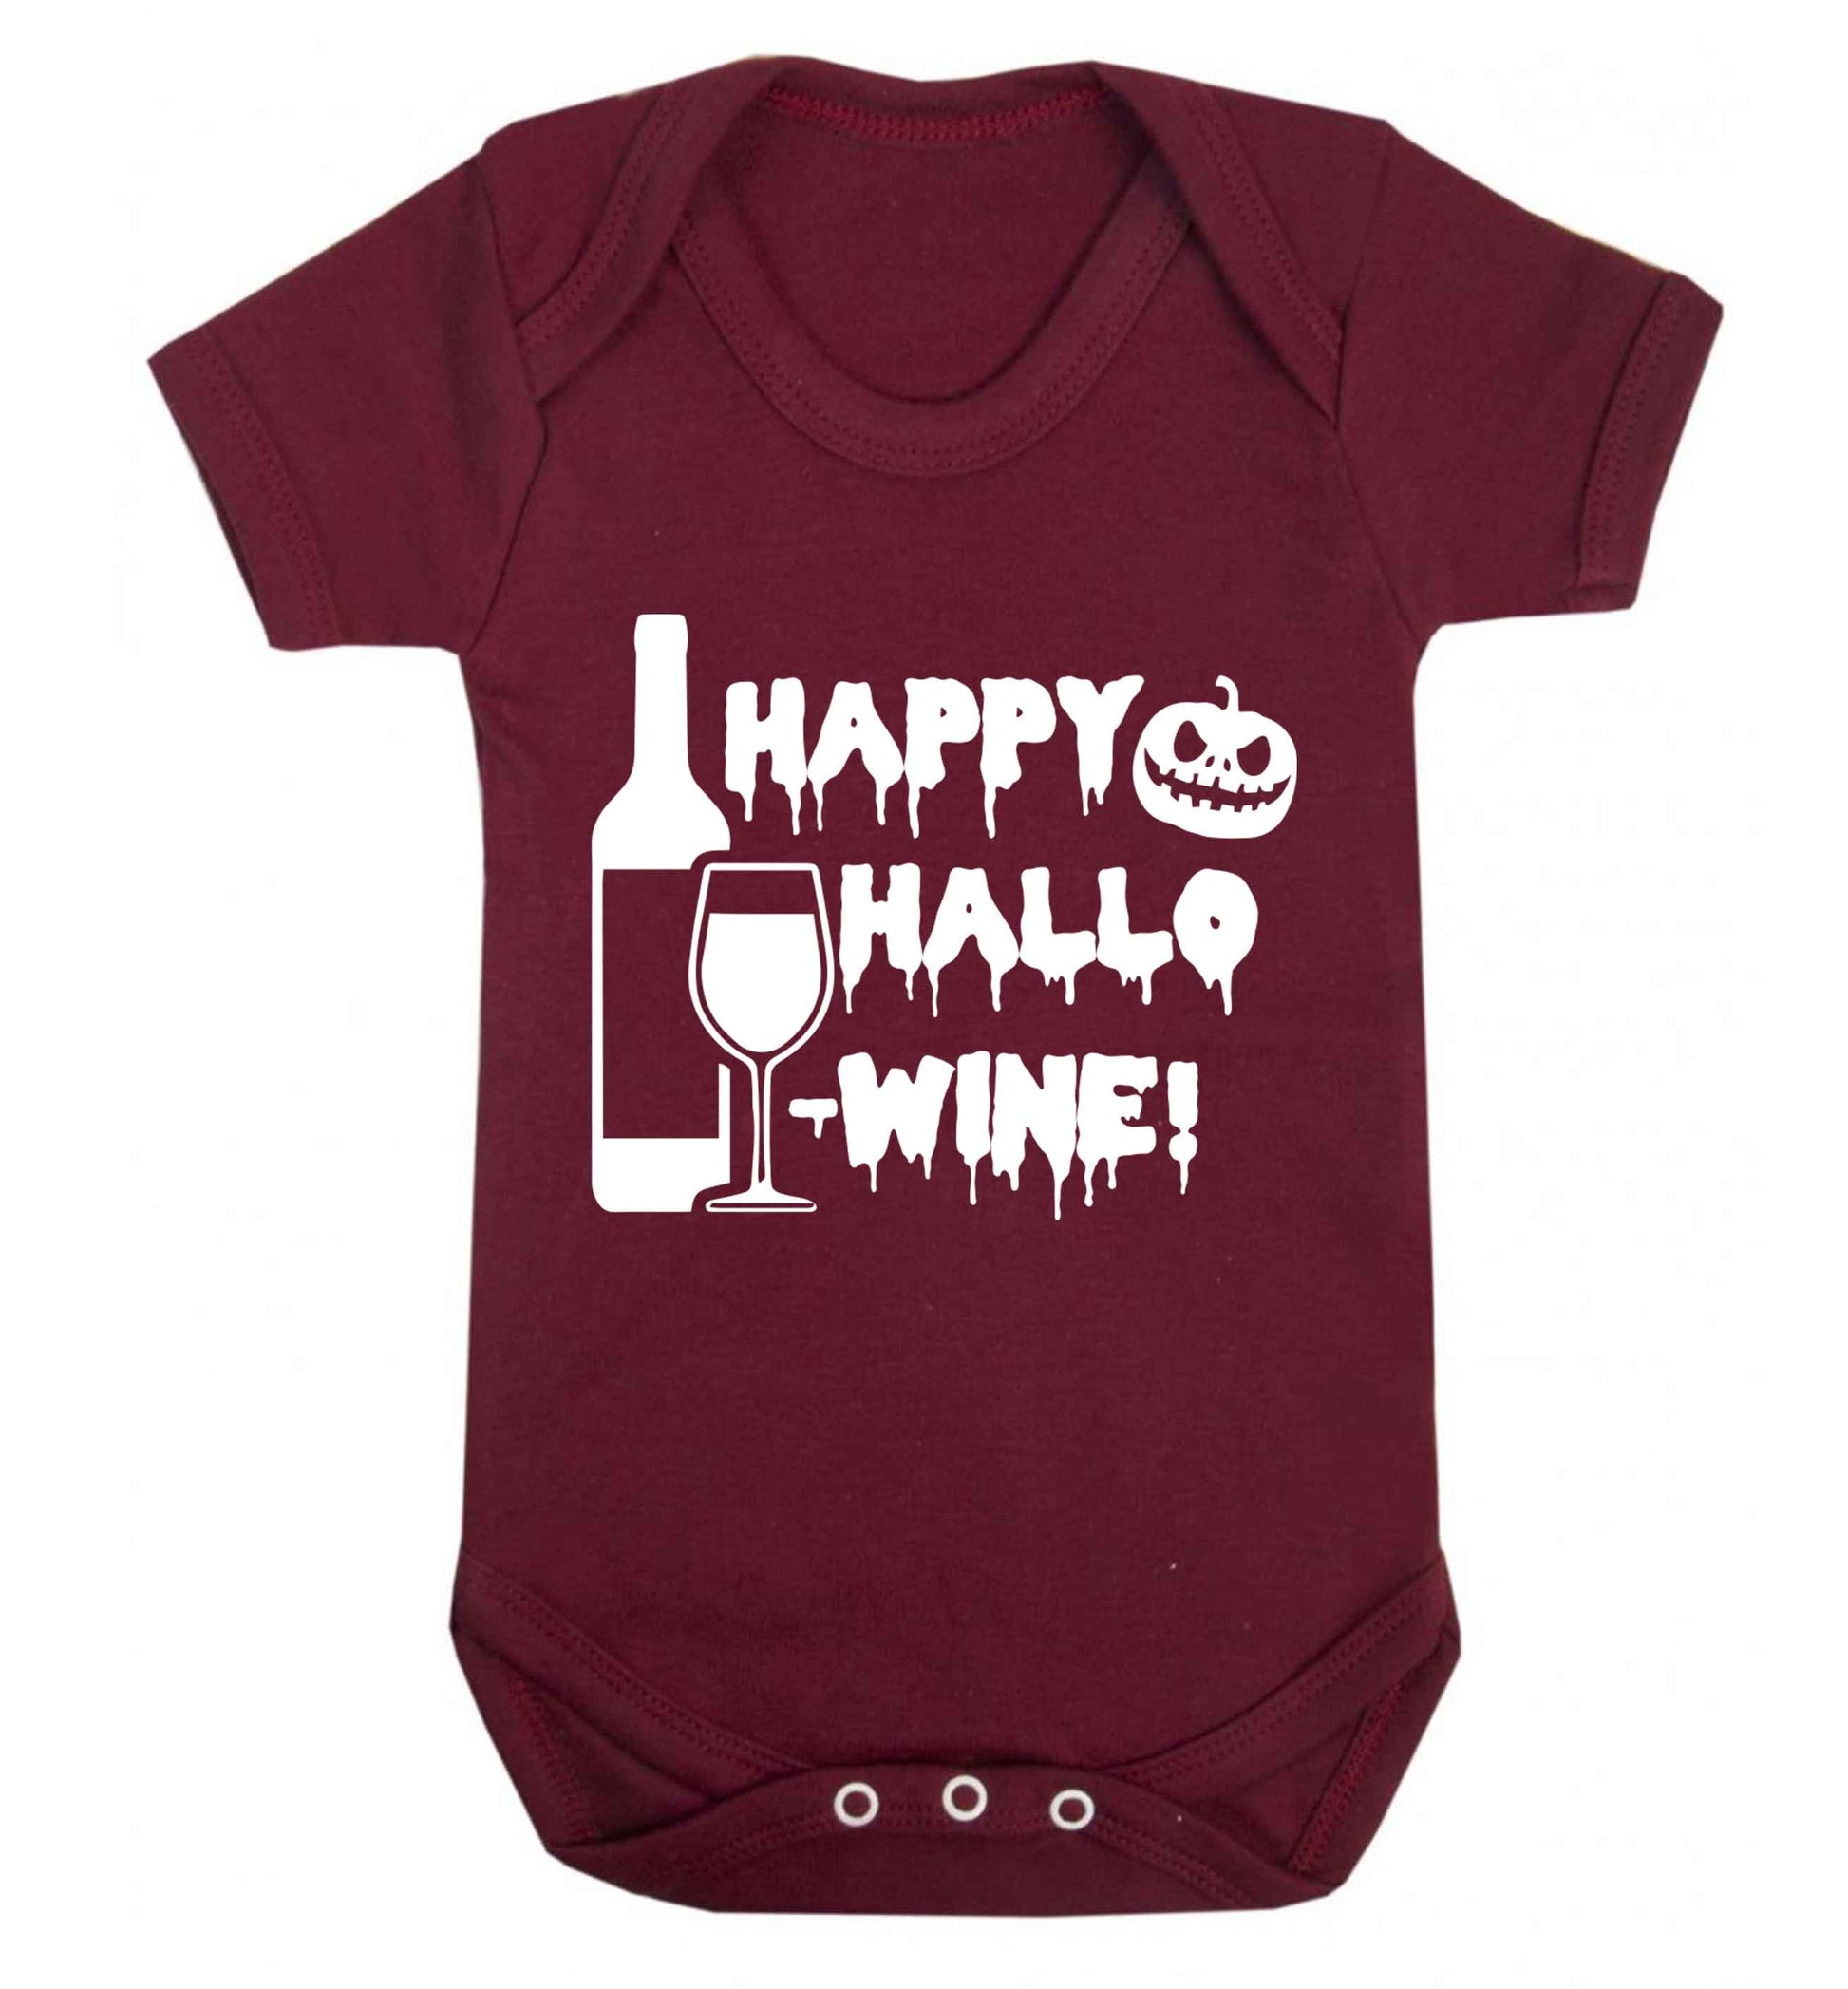 Happy hallow-wine Baby Vest maroon 18-24 months